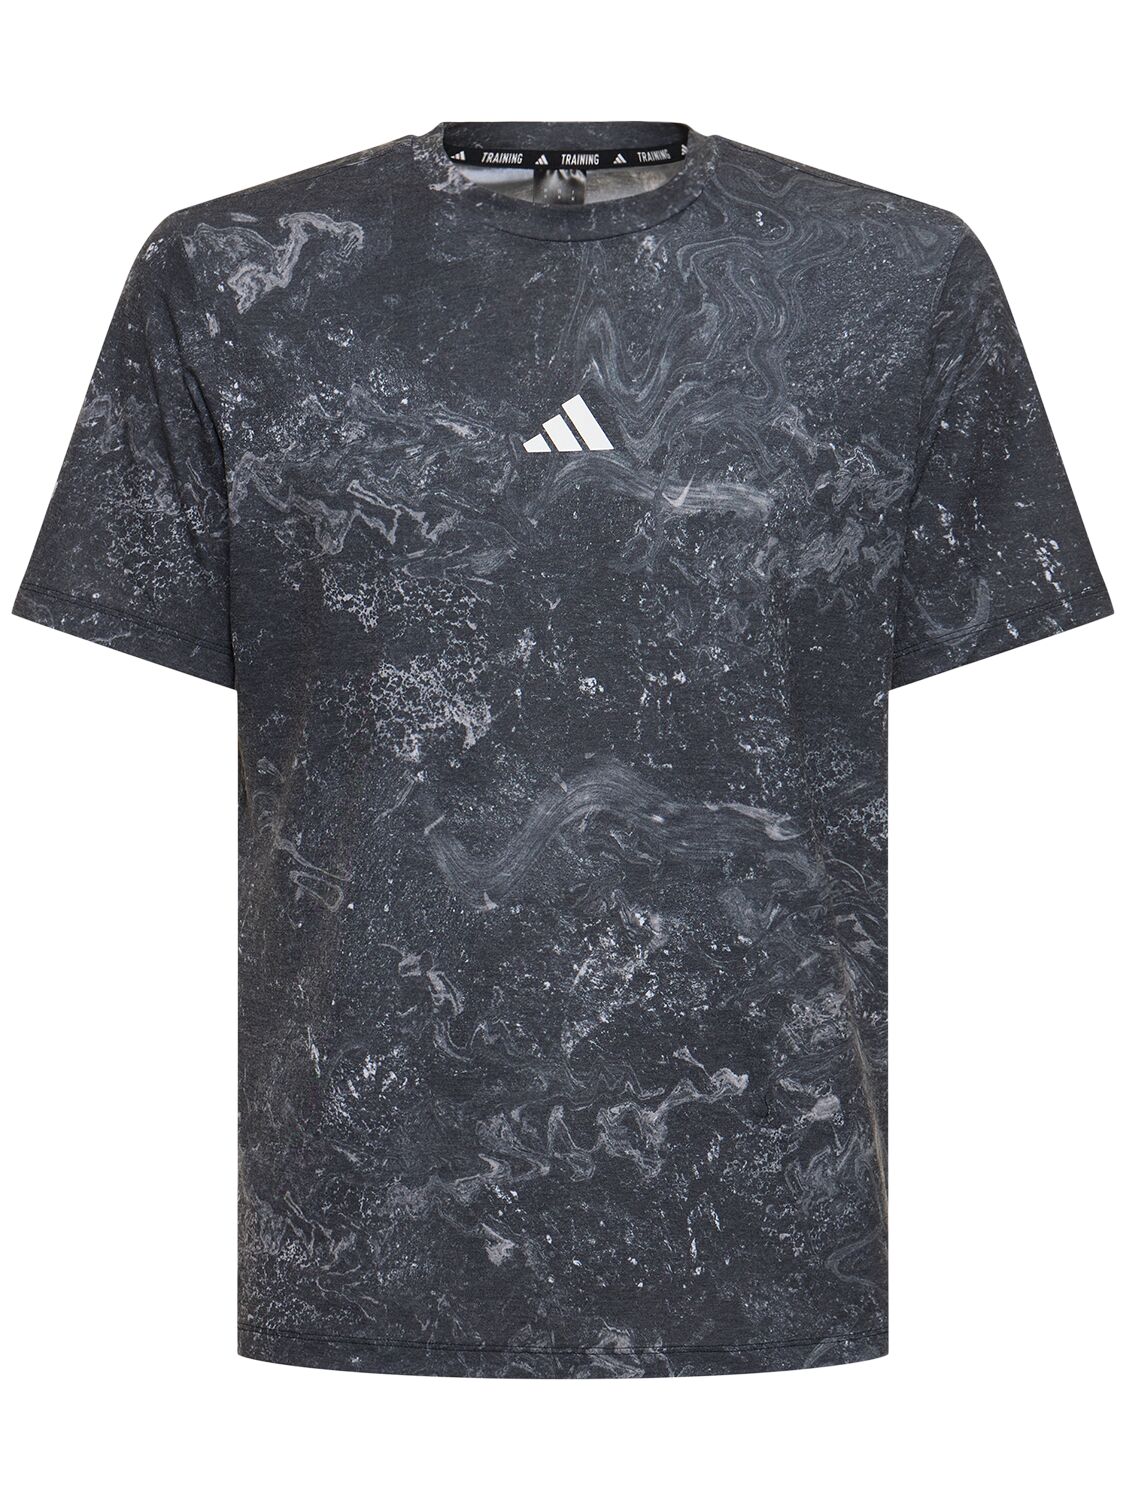 Adidas Originals Power Workout T-shirt In Black,grey